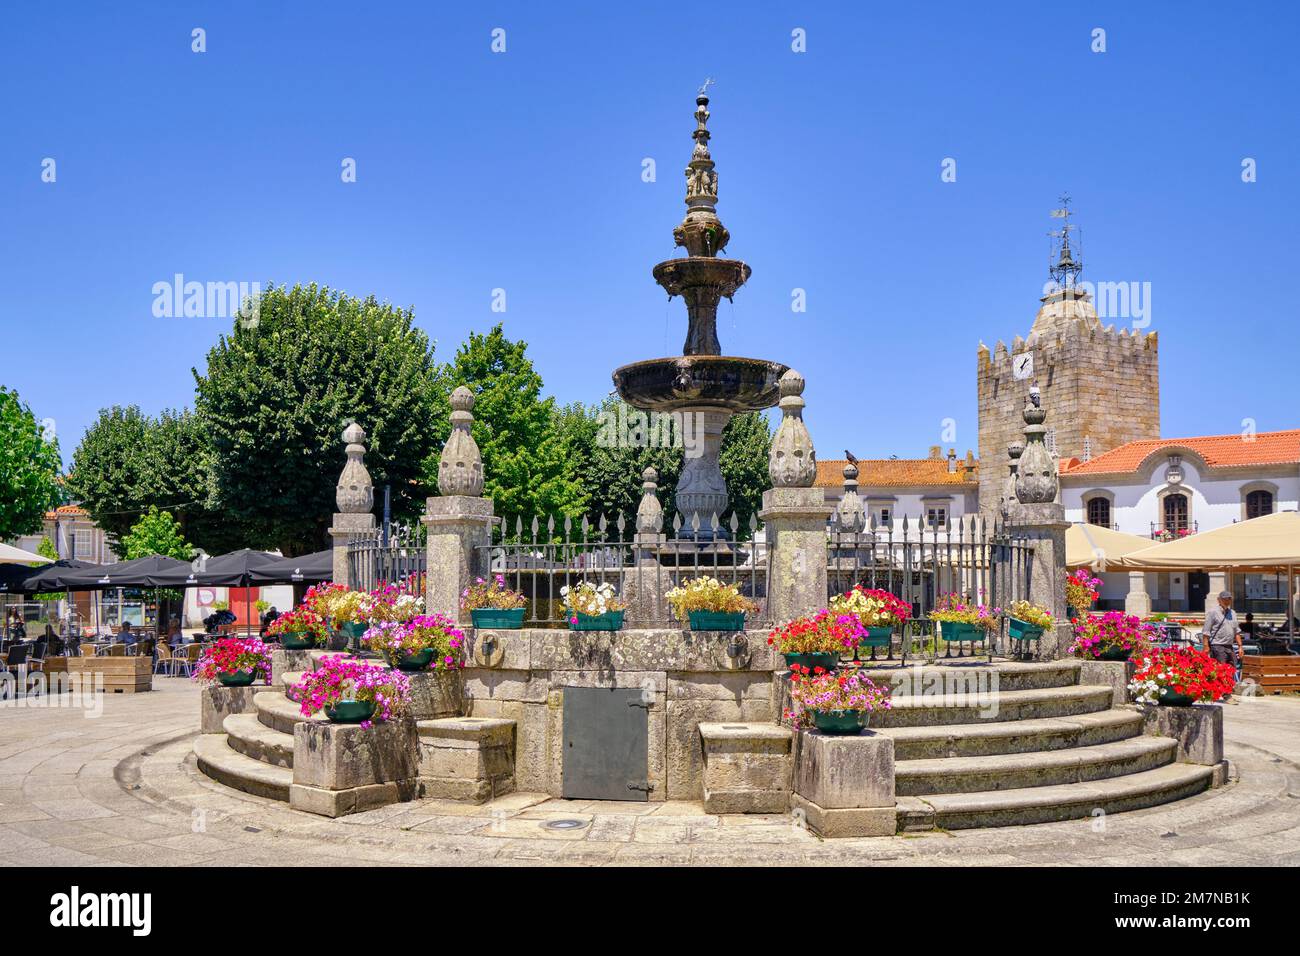 The beautiful 16th century fountain in the historic center of Caminha. Alto Minho, Portugal Stock Photo